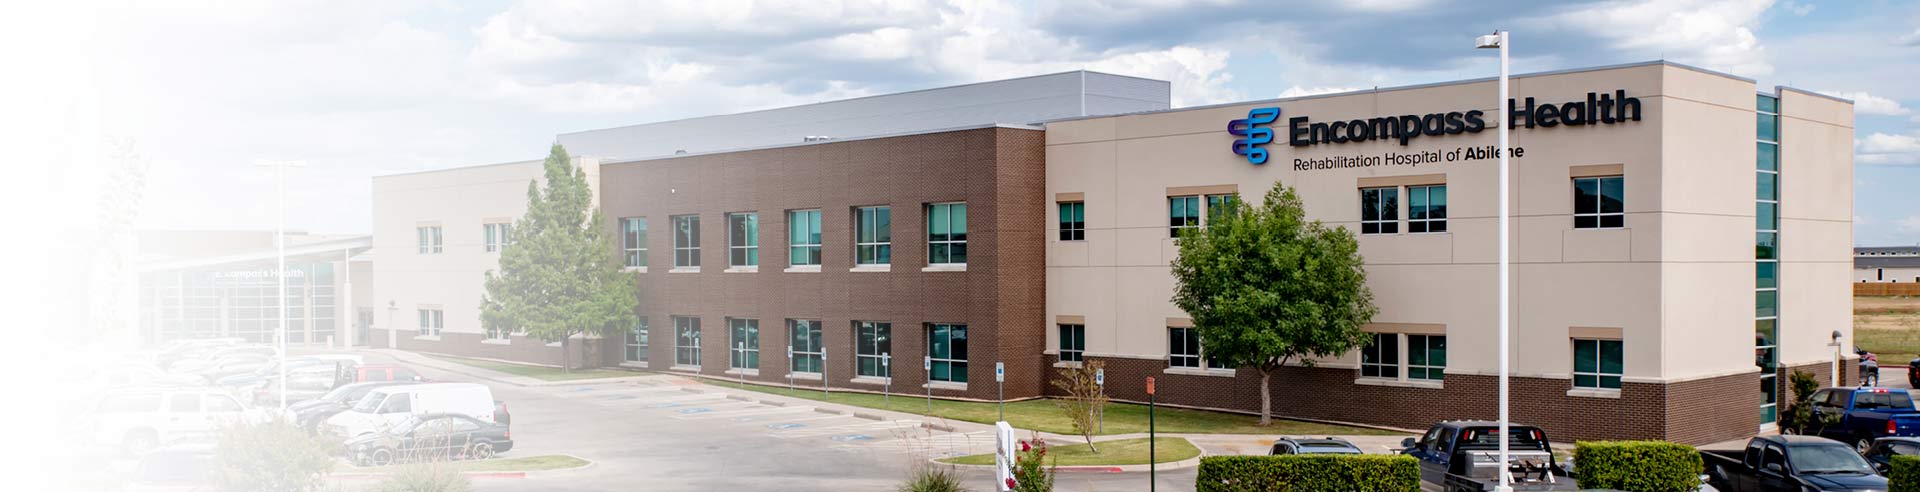 Encompass Health Rehabilitation Hospital of Abilene exterior image